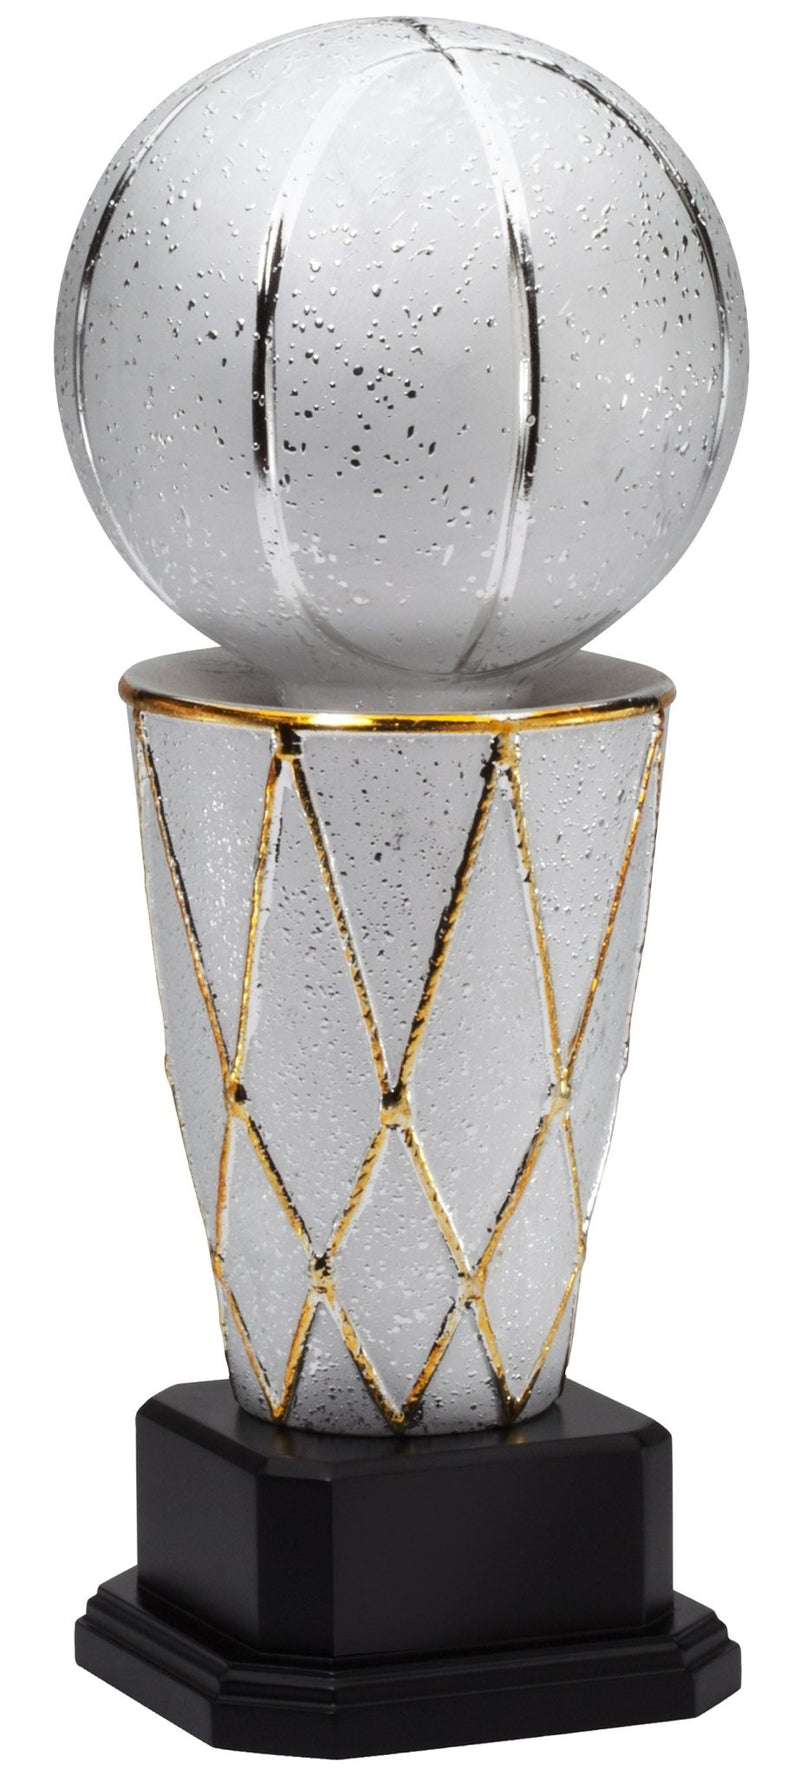 Ceramic Sport Series Basketball Trophy Cup Award - AndersonTrophy.com